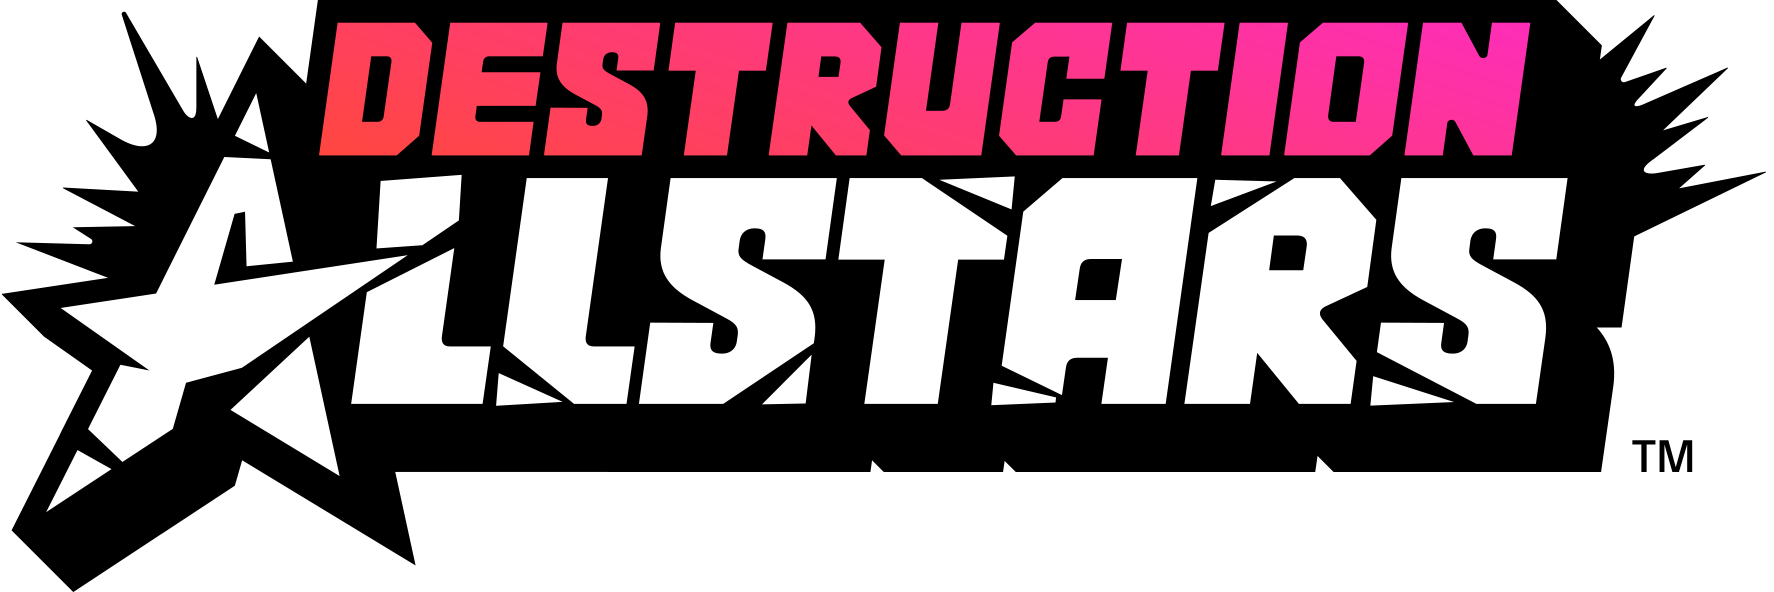 The Art of Destruction AllStars